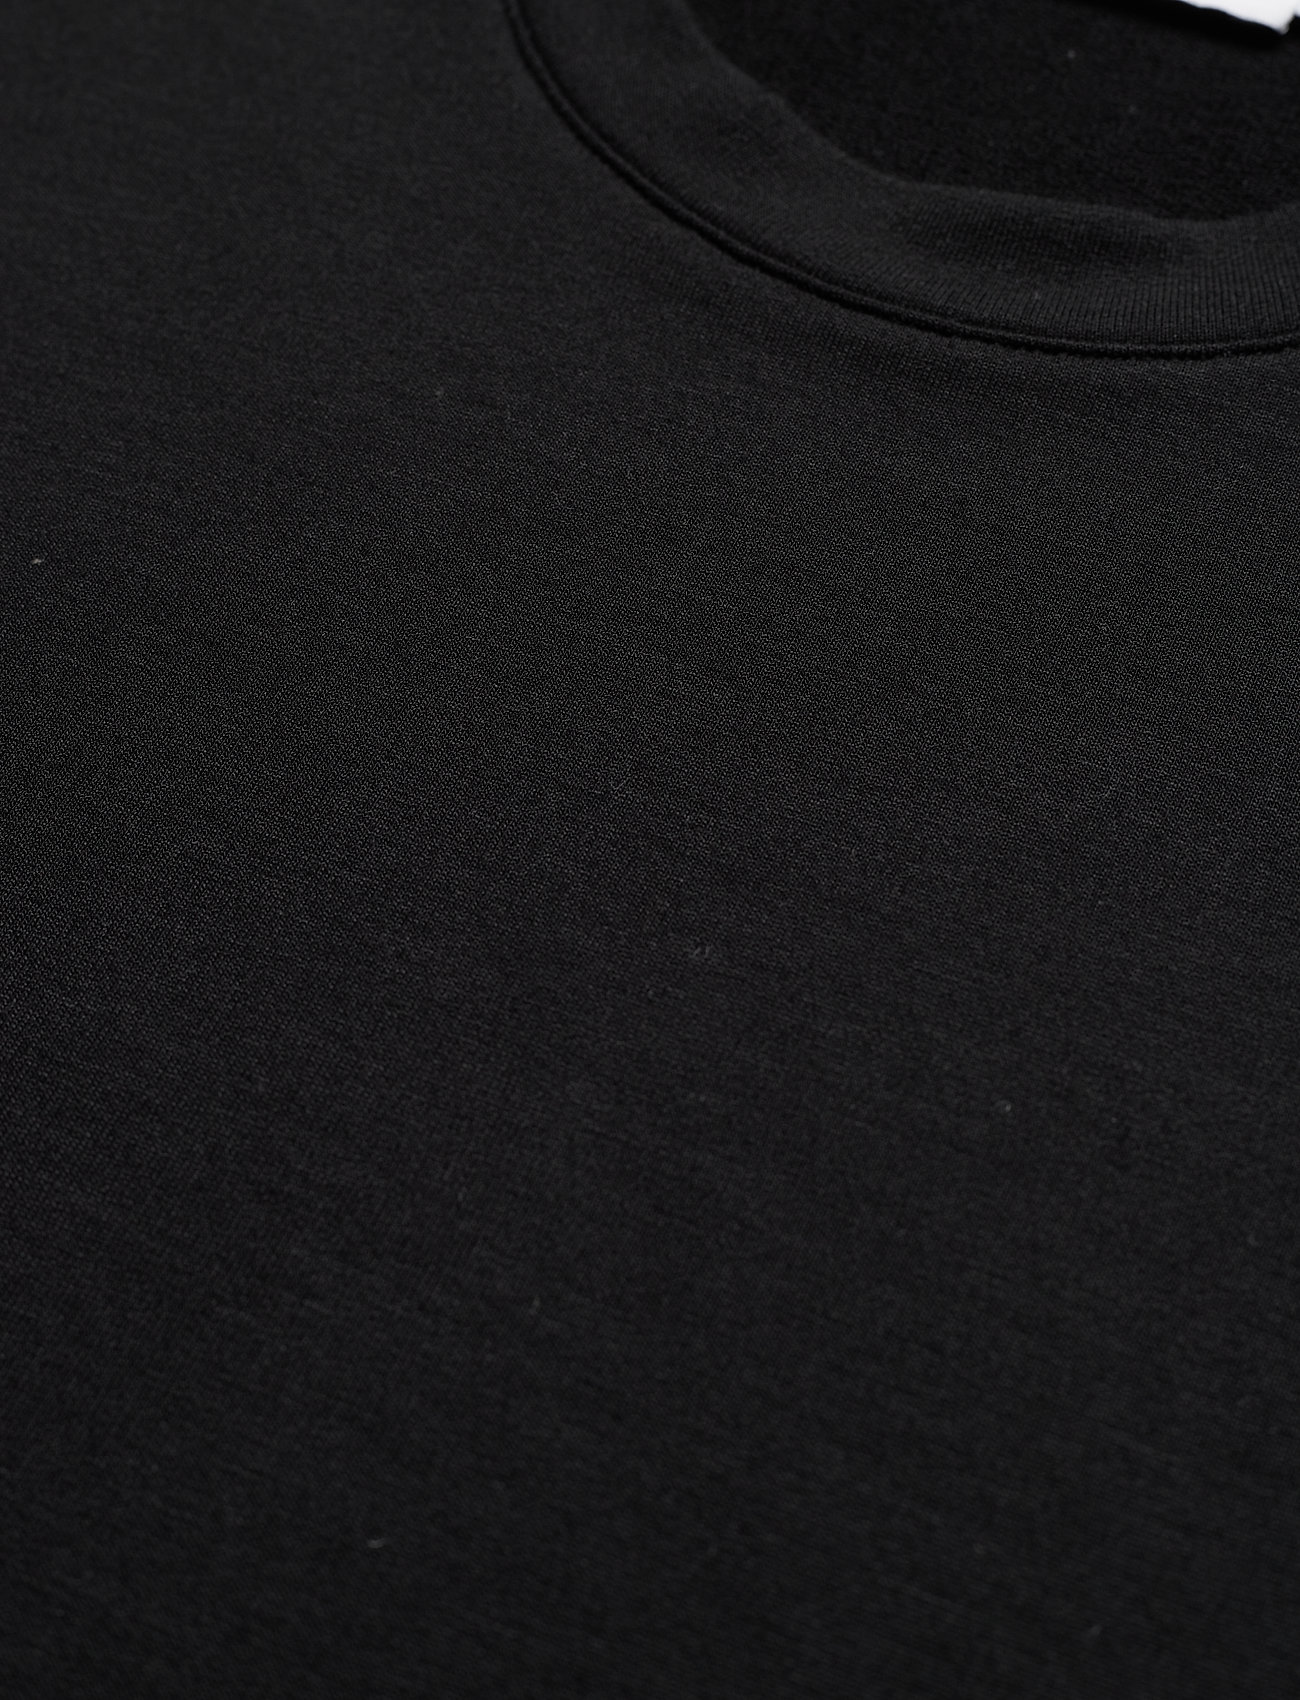 Stylein - CHAMBERS - t-shirts - black - 4